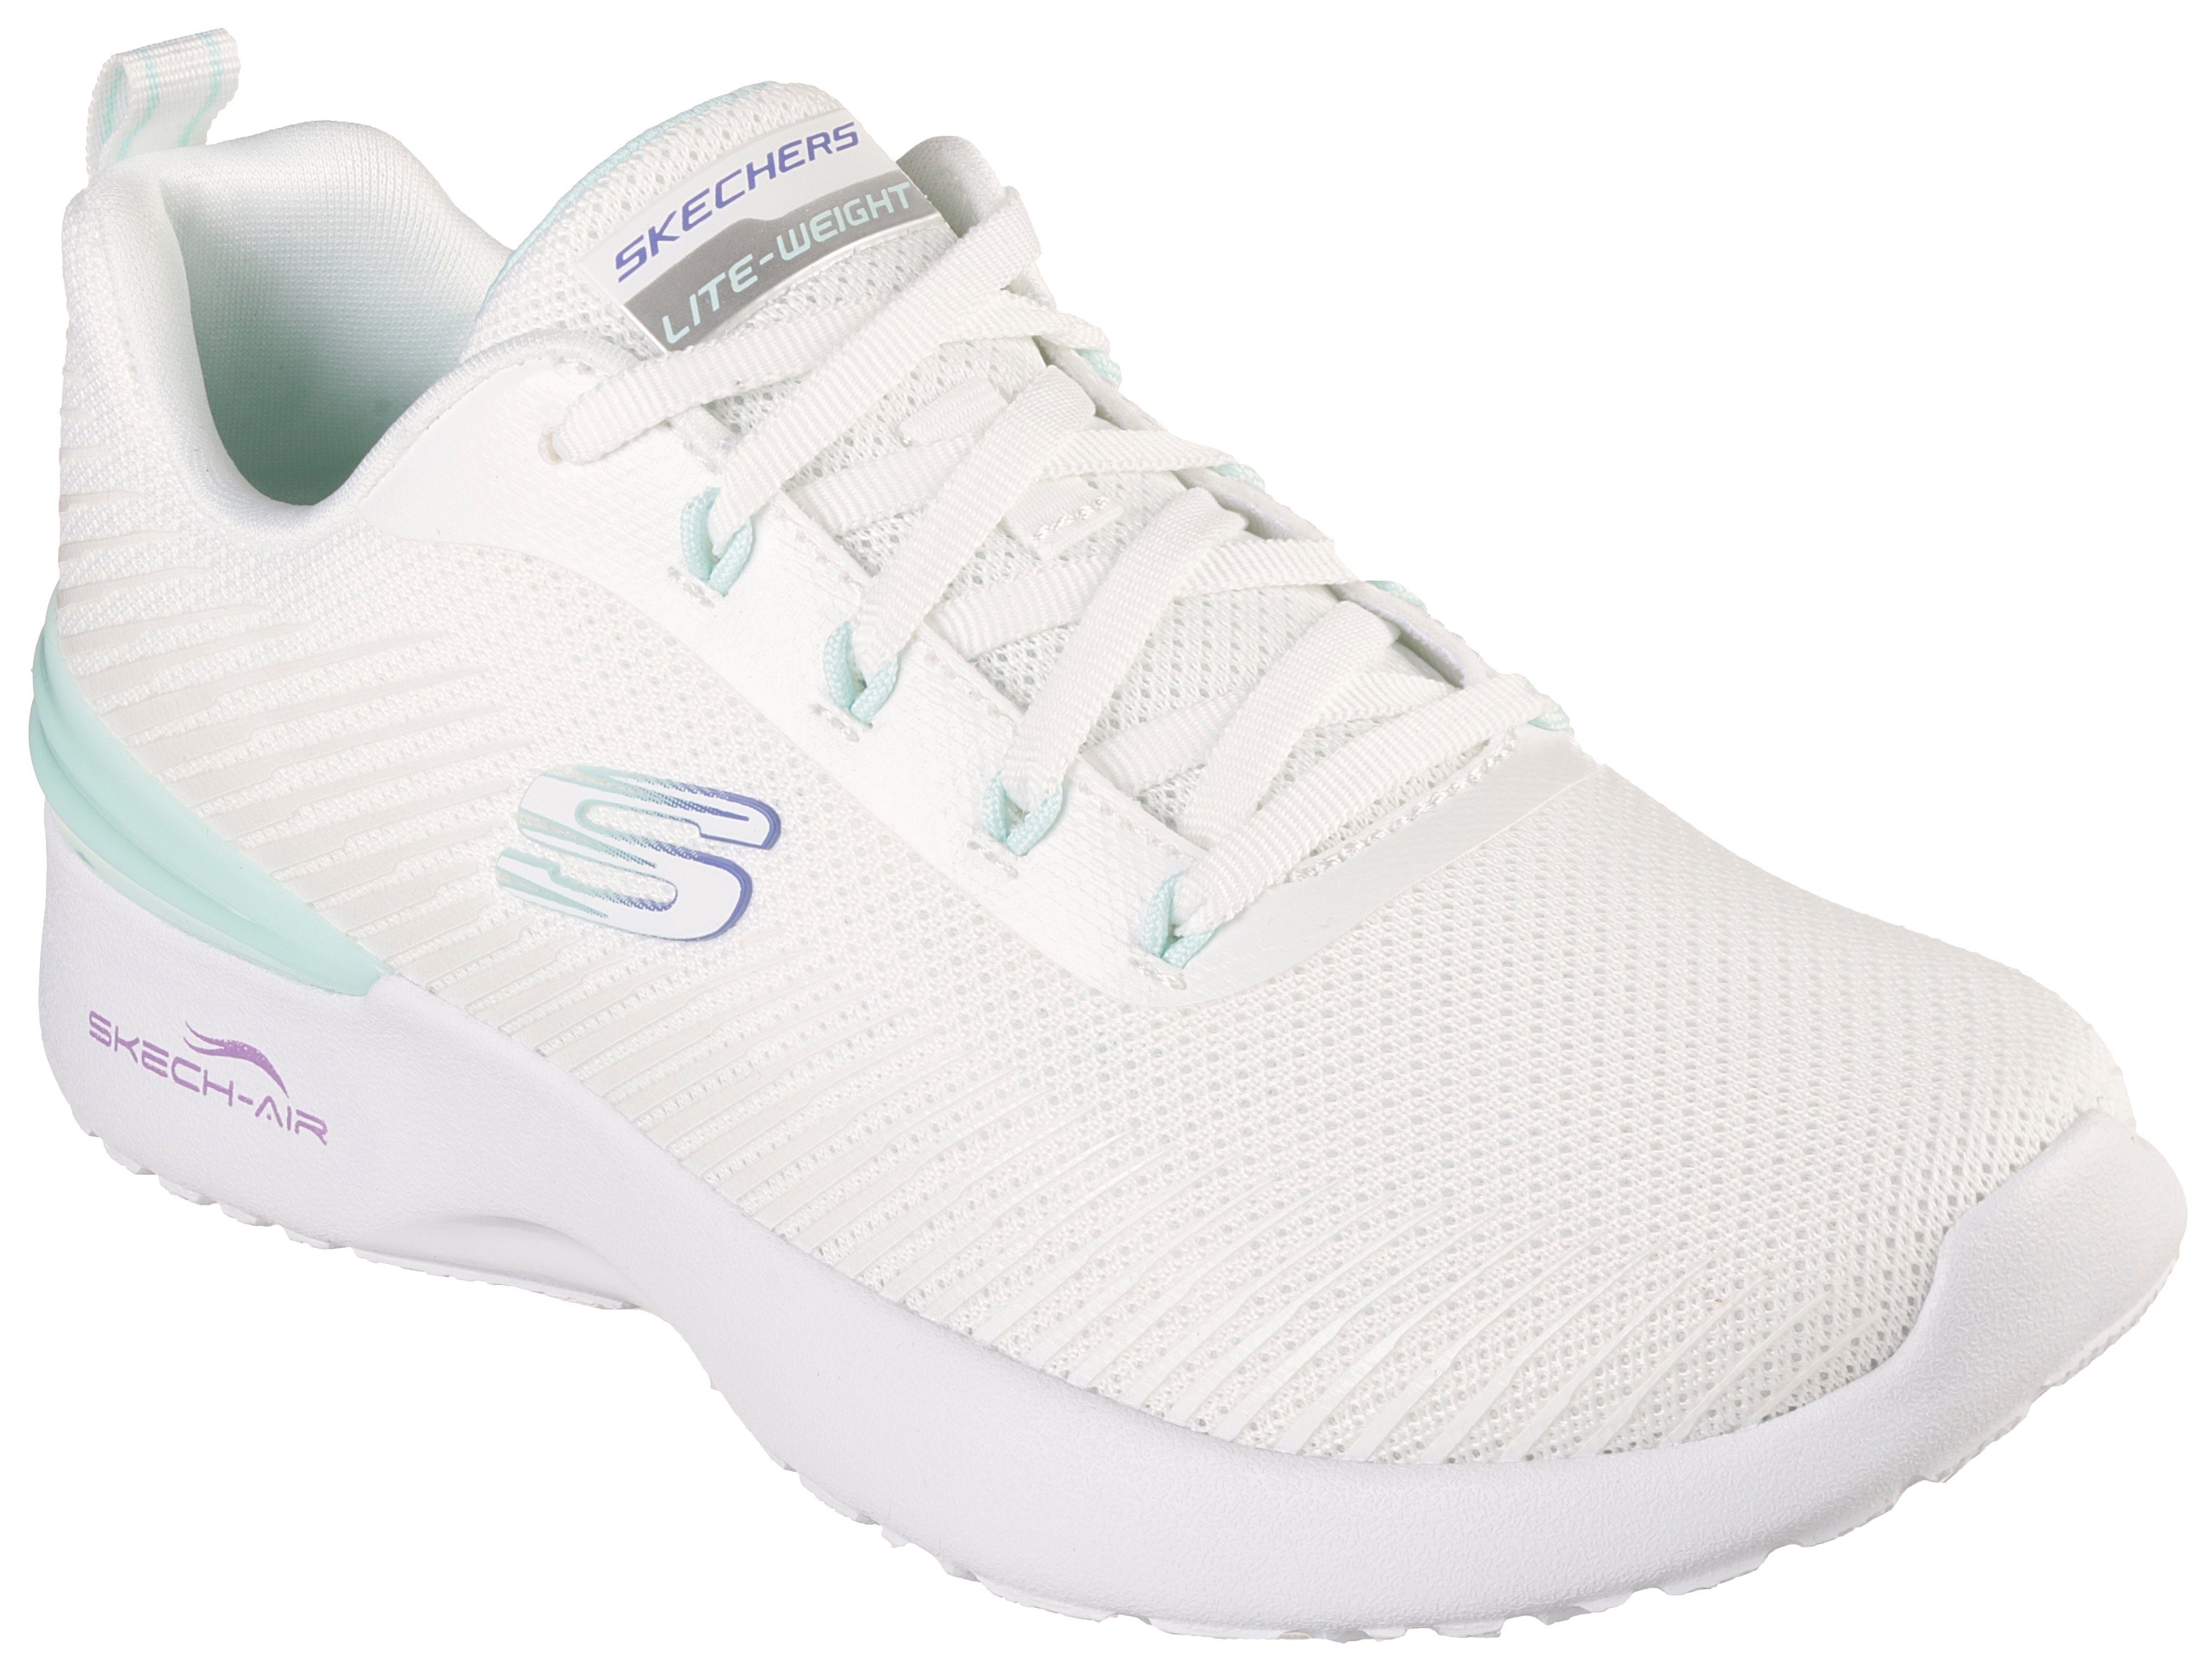 Skechers SKECH-AIR DYNAMIGHT LUMINOSITY Sneaker mit Memory Foam Ausstattung weiß-mint